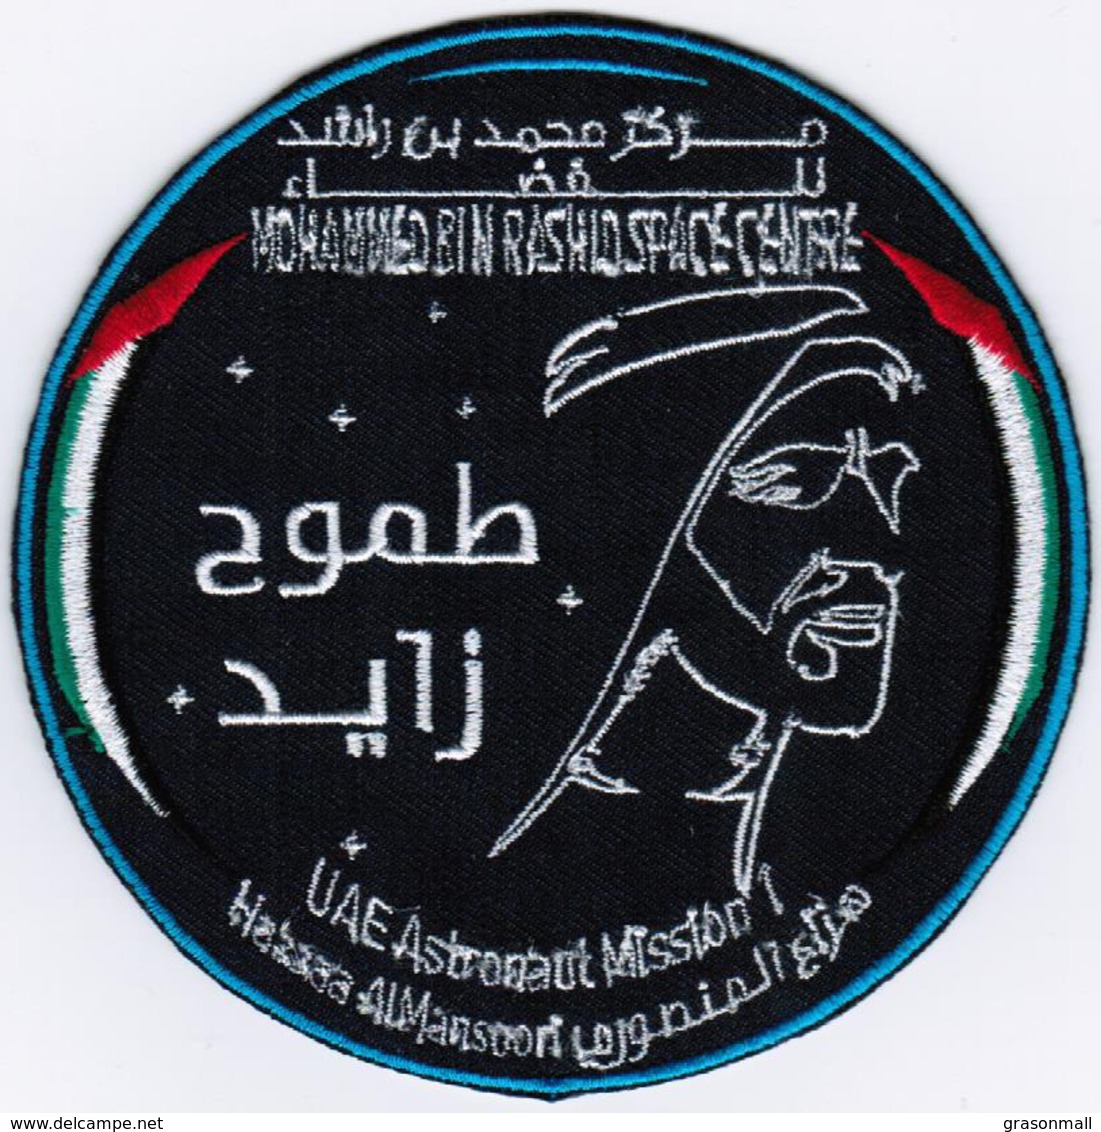 UAE Astronaut Mission 1 Hazzaa AlMansoori Mohammed Bin Rashid Space Centre Patch - Patches